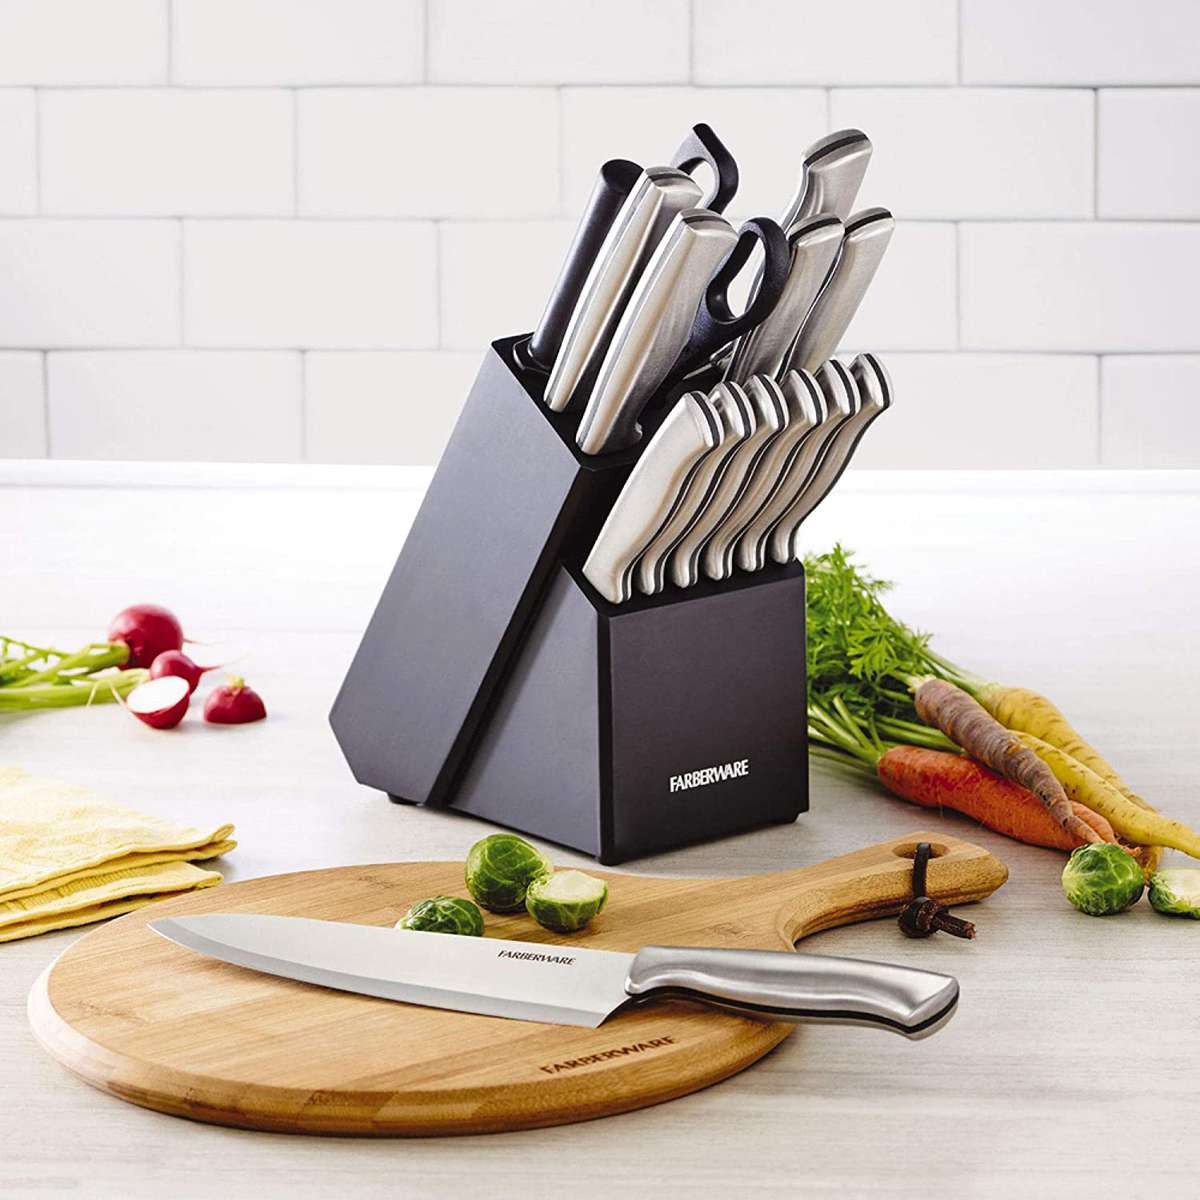 Faberware Kitchen Knife Set